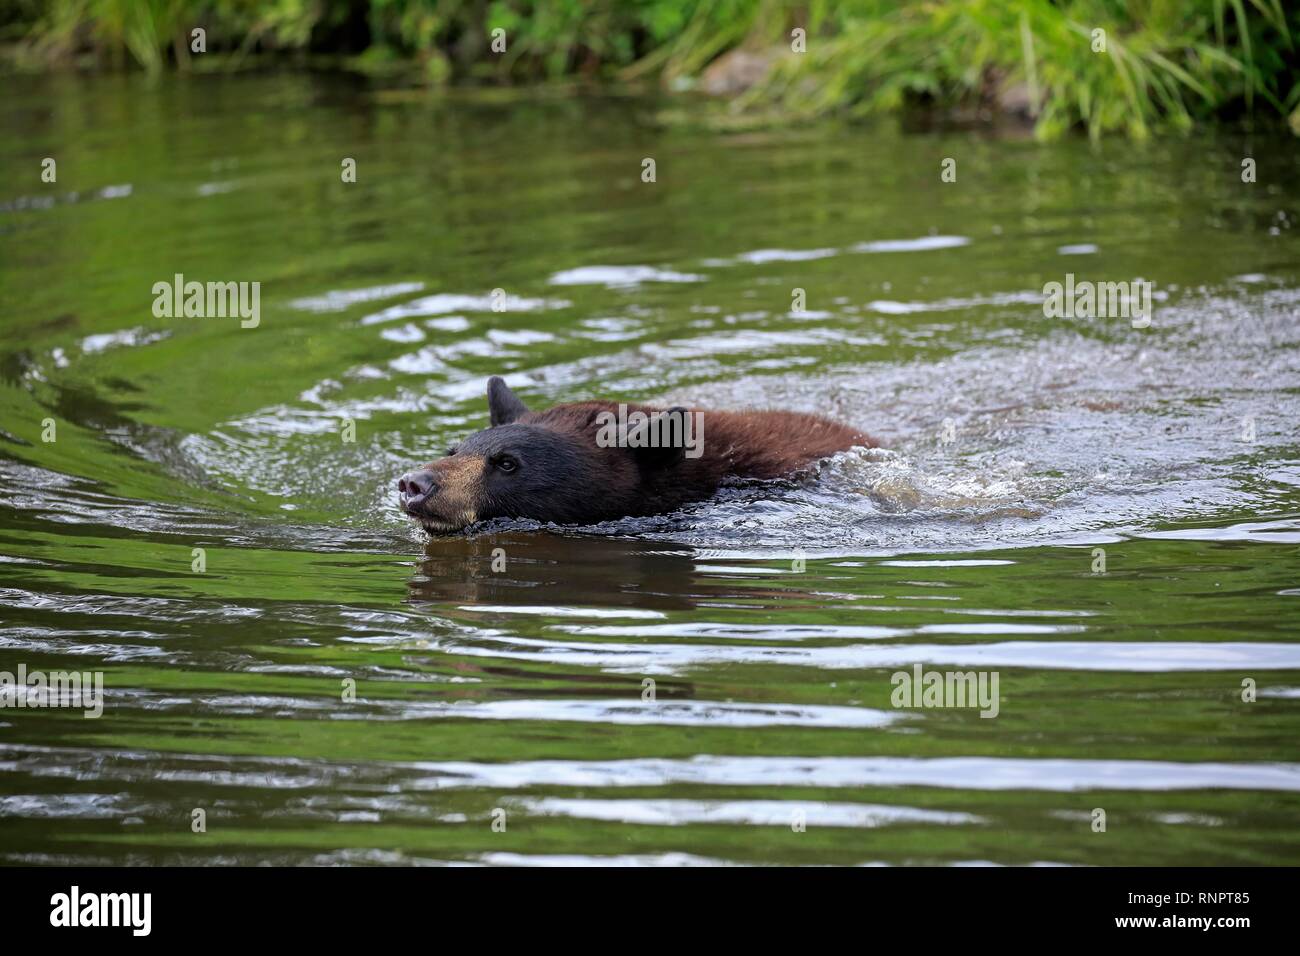 American Black Bear (Ursus americanus), young animal swimming in water, Pine County, Minnesota, USA Stock Photo